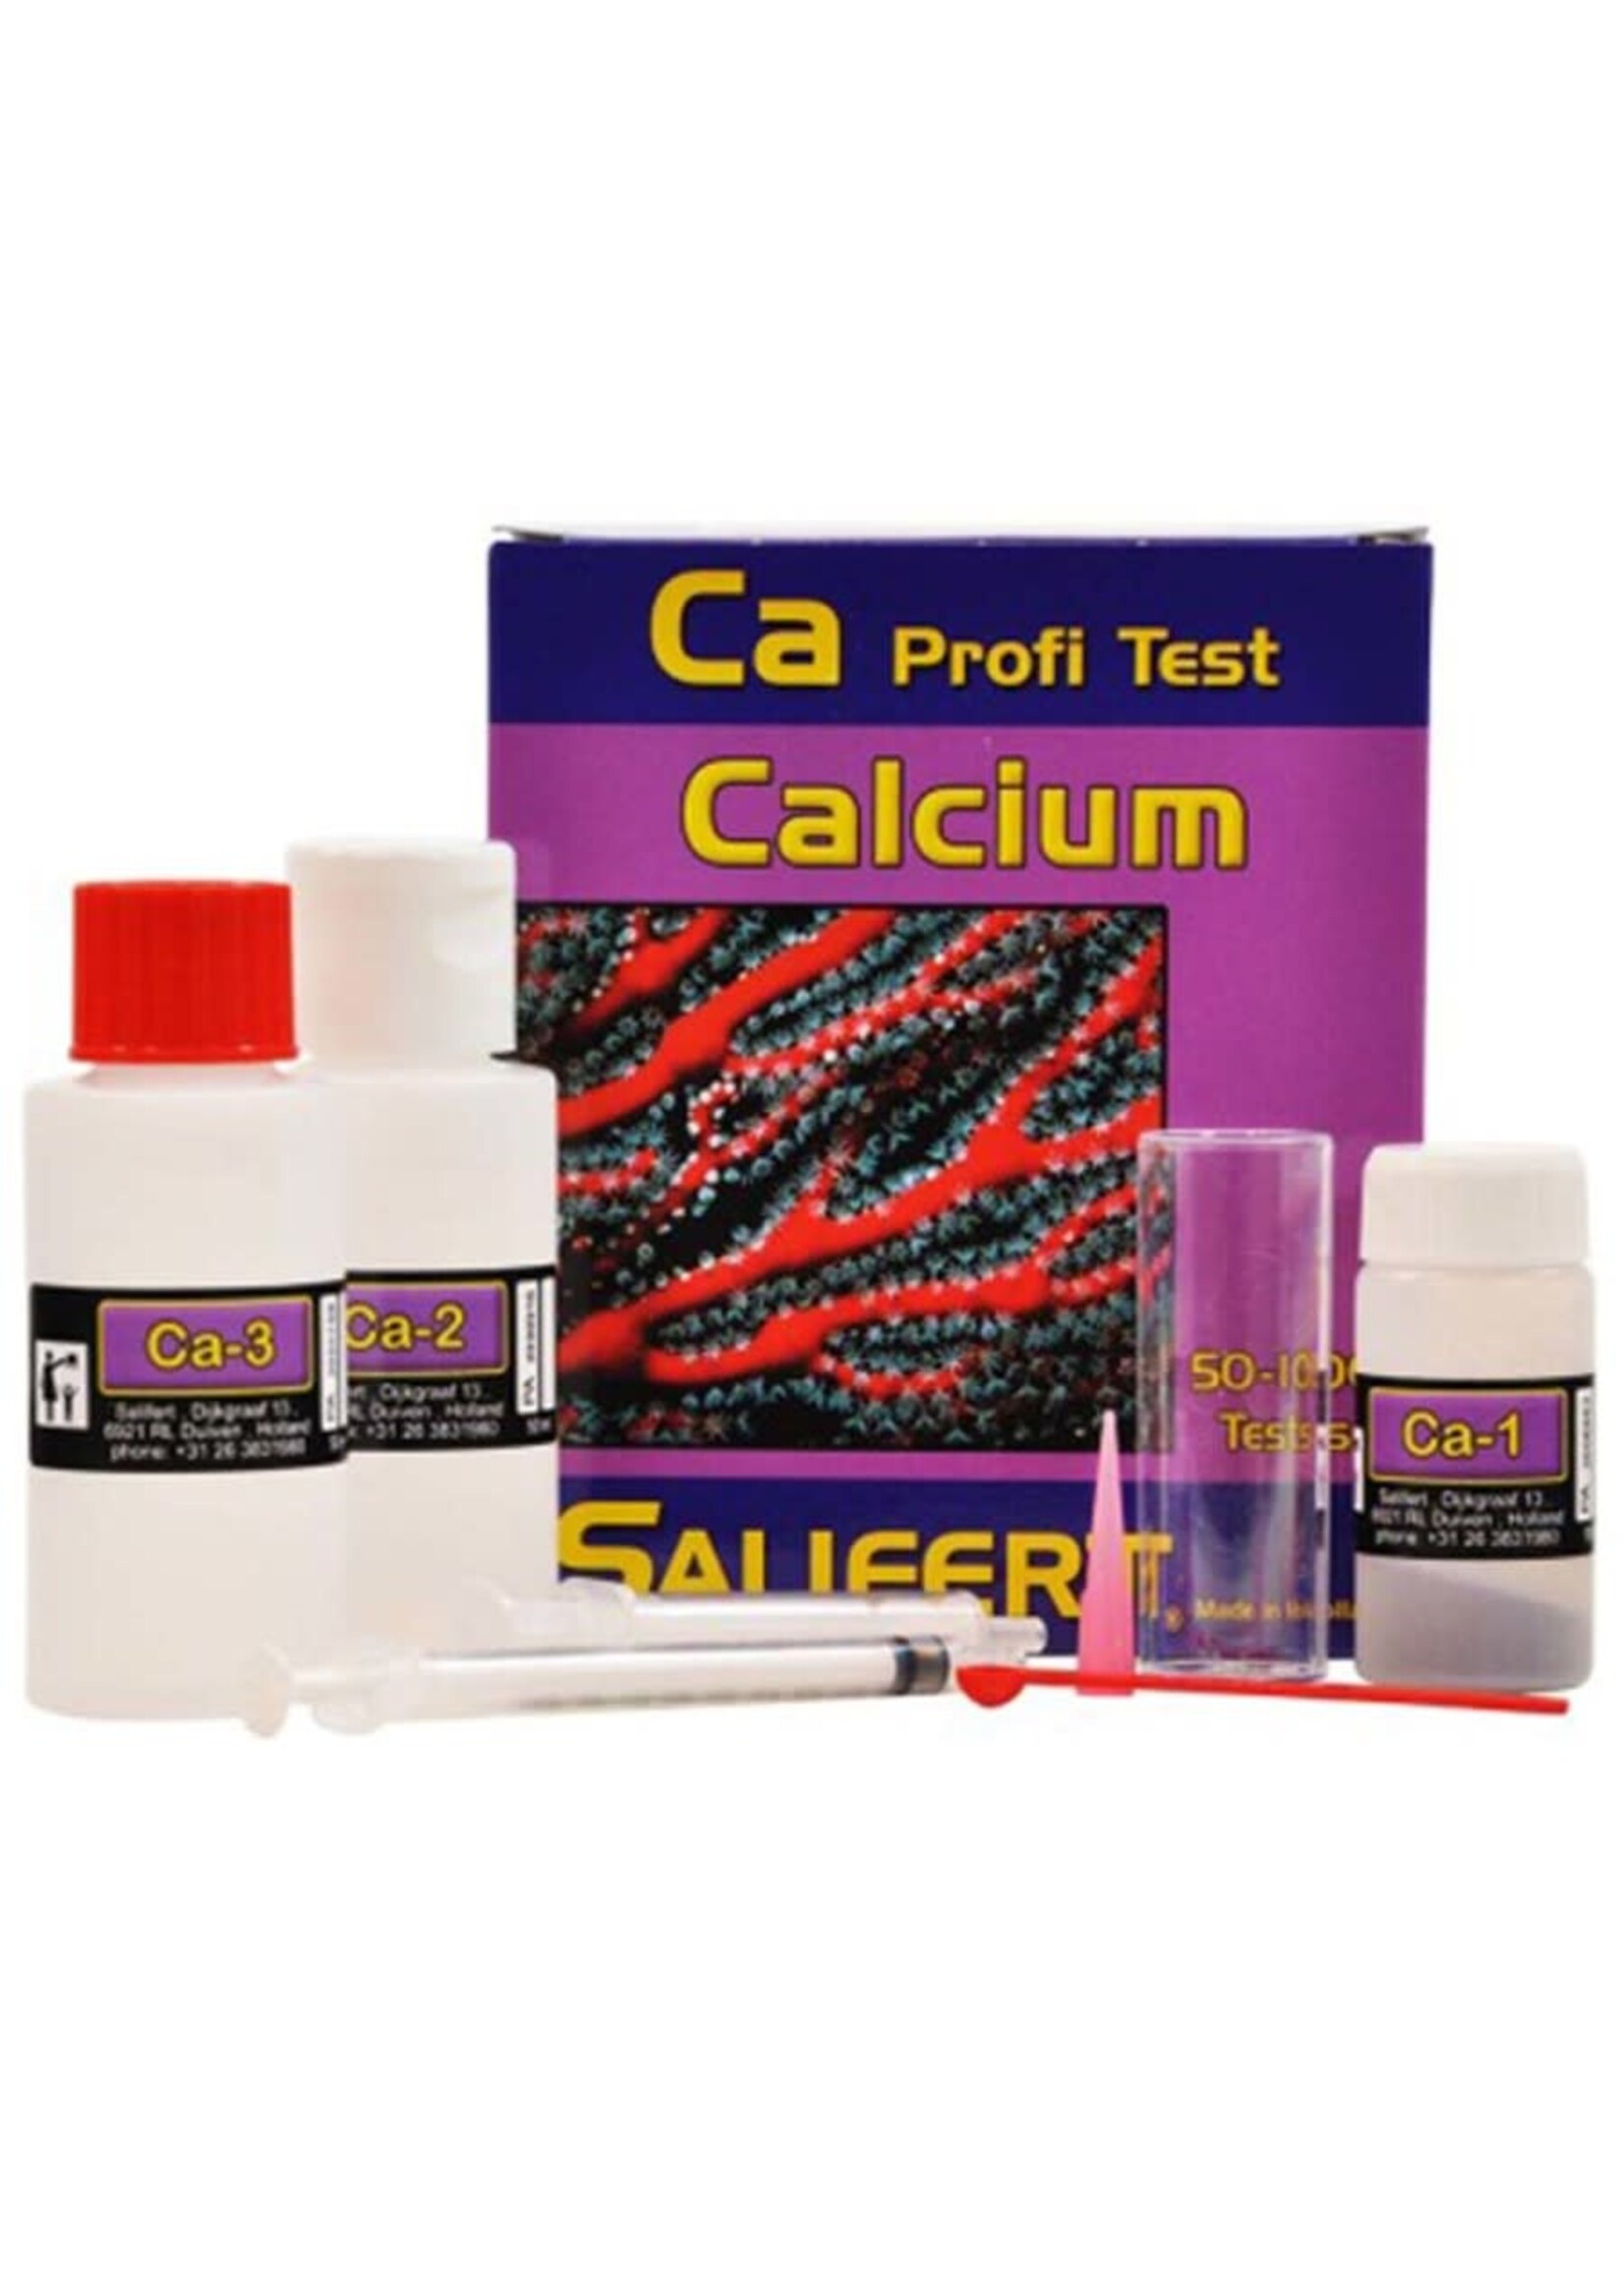 Salifert SALIFERT TEST KIT CALCIUM 50 TEST